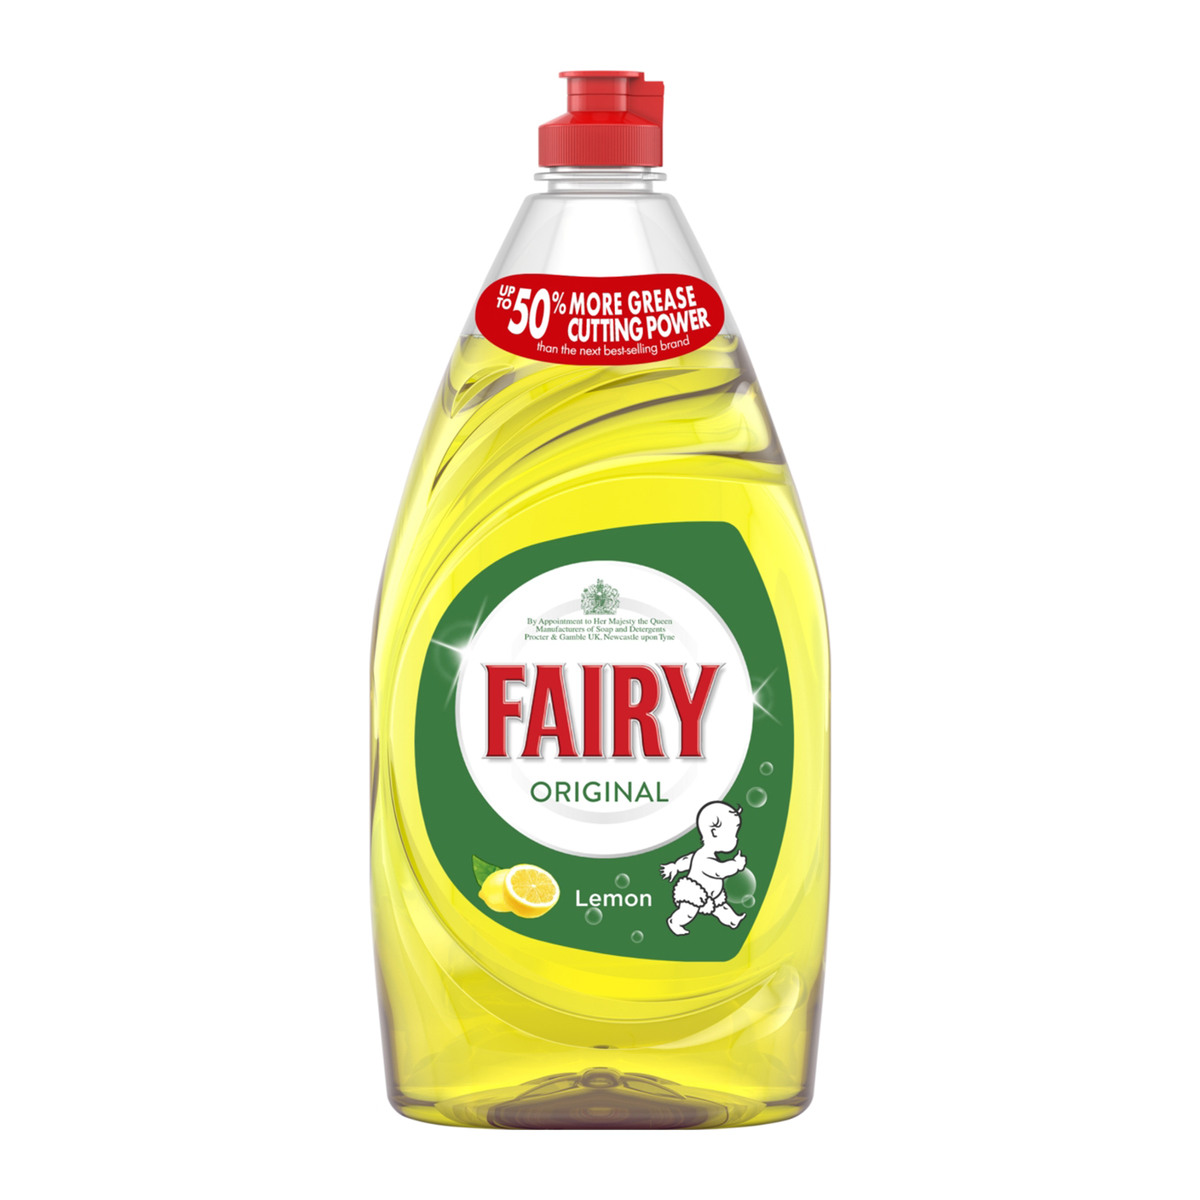 Fairy средство для мытья посуды лимон. Фейри лимон 450 мл. Жидкость для мытья посуды Фейри. Средство для мытья посуды "Fairy" Original, 90 мл. Dishwashing Liquid Fairy Lemon 900ml.